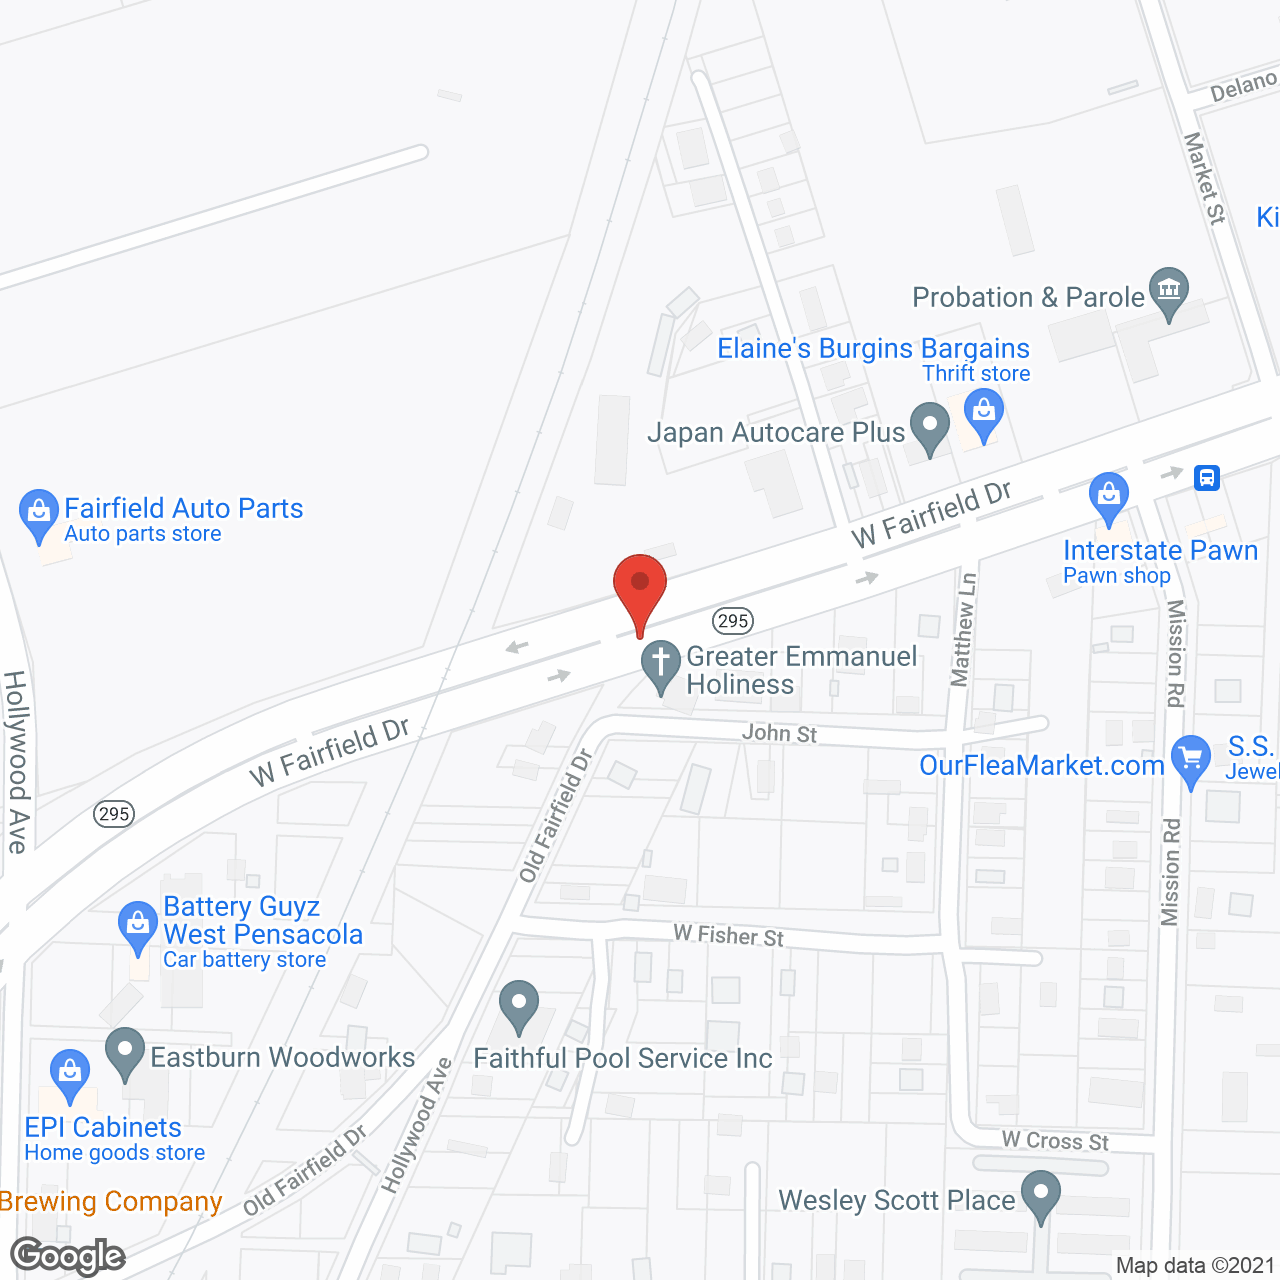 FL Memory Lane in google map